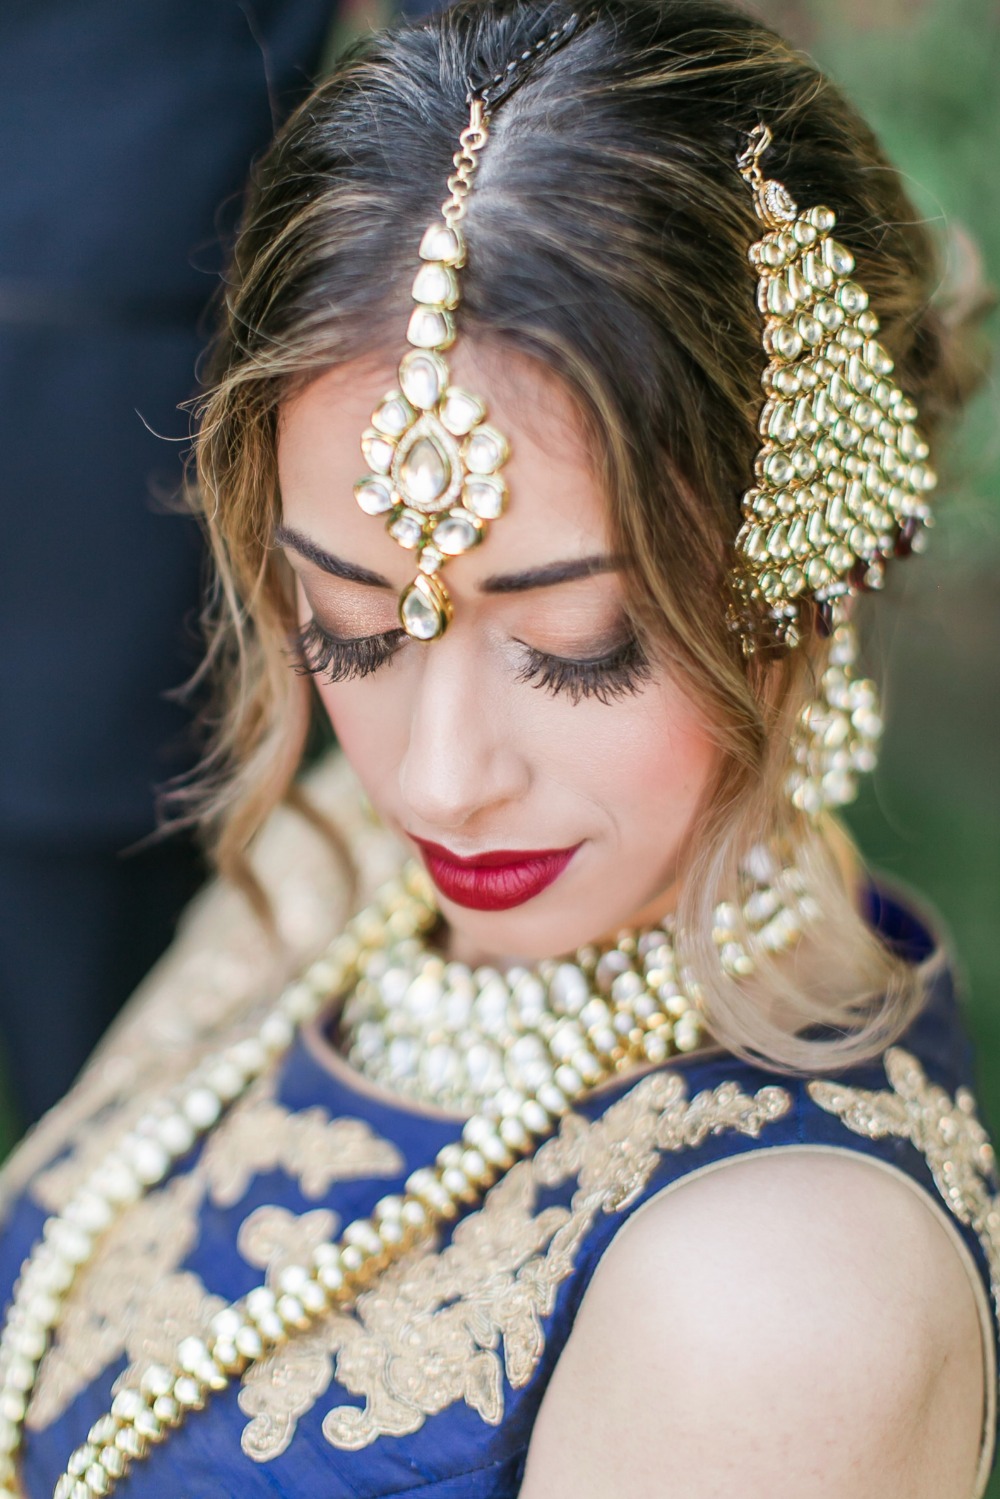 Ornate bridal jewelry